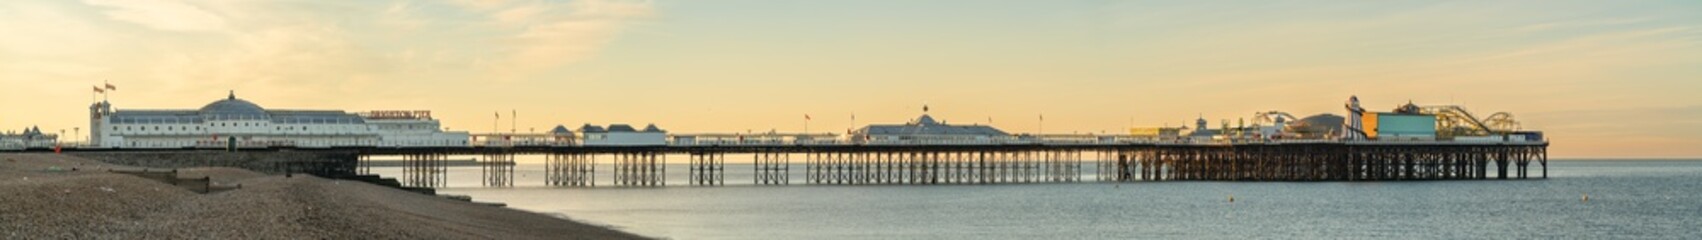 Panoramic view of the Brighton Pier at sunrise. England